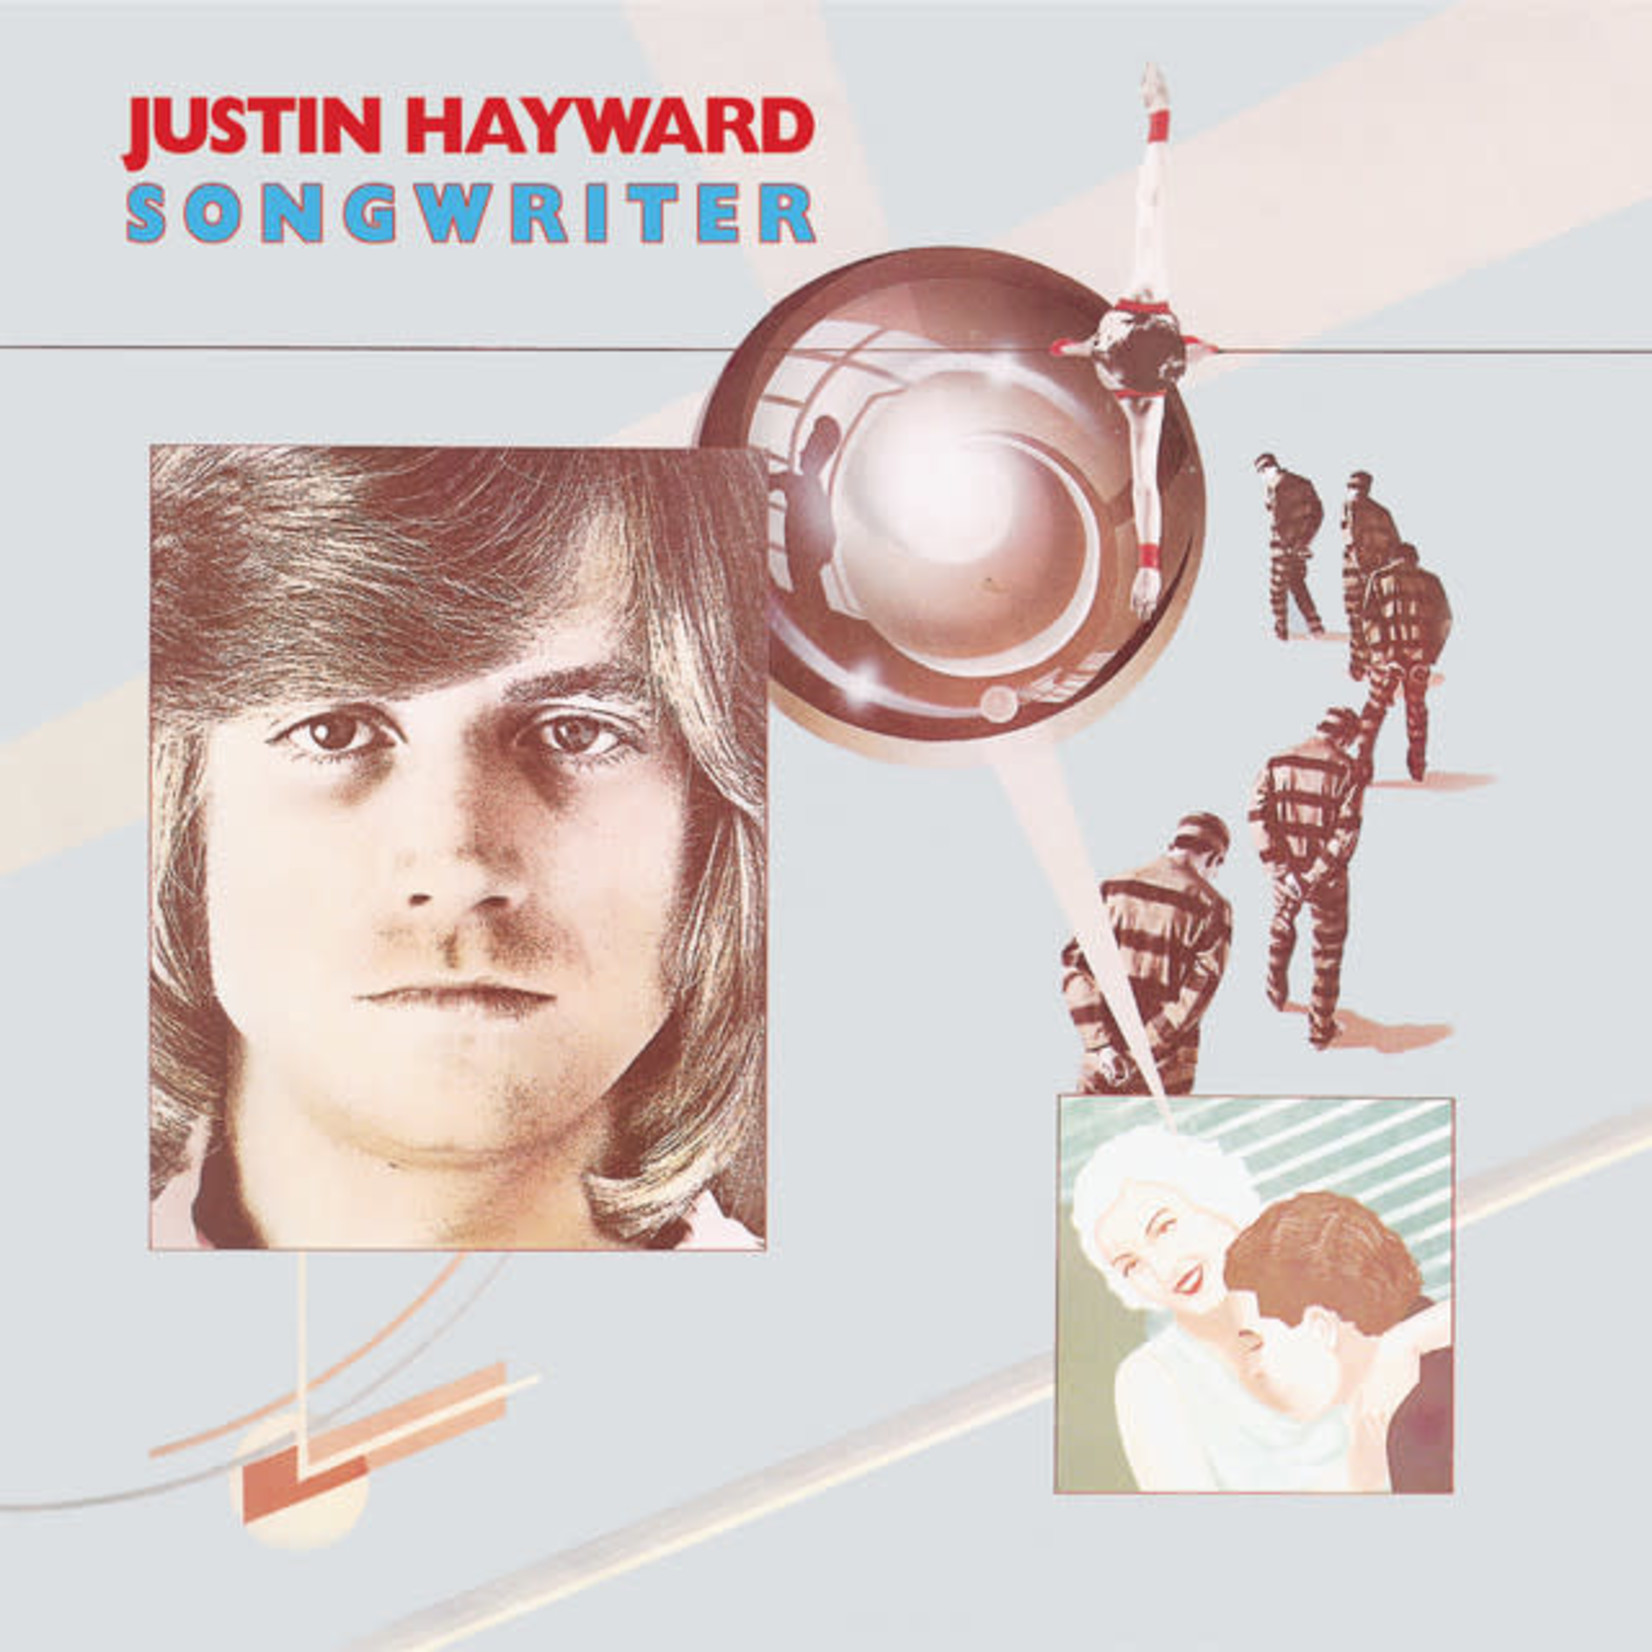 [Discontinued] Justin Hayward - Songwriter